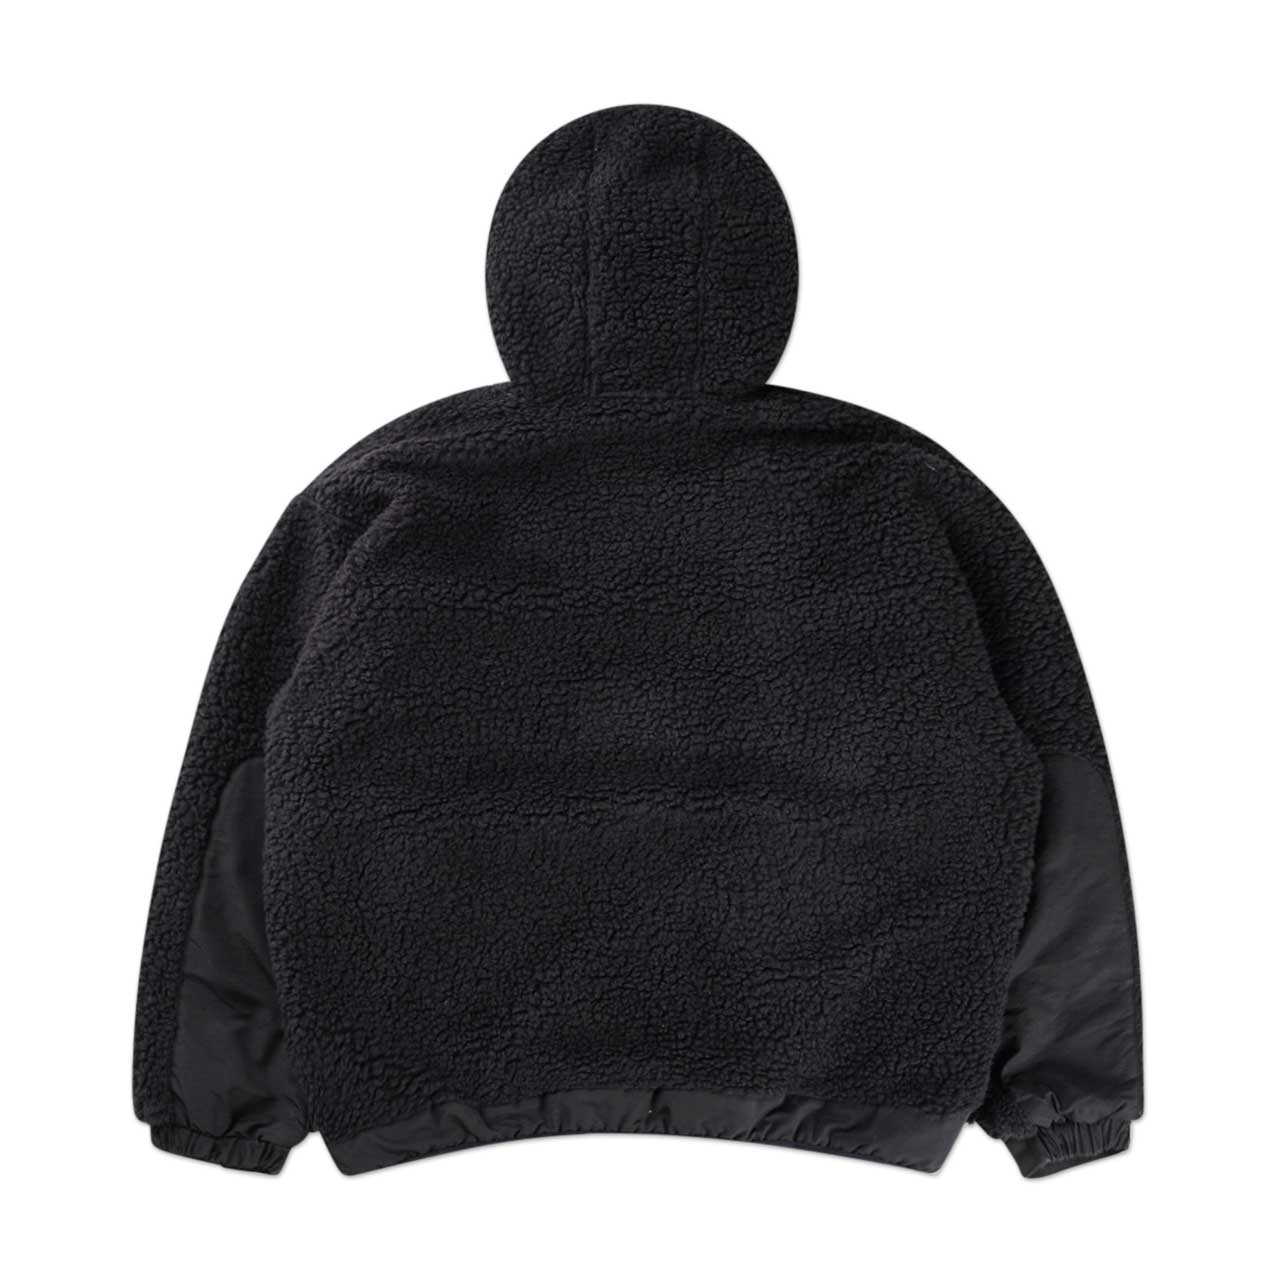 flagstuff f/z over hoodie jacket (black) - 19aw-spot-fs-01 - a.plus - Image - 2